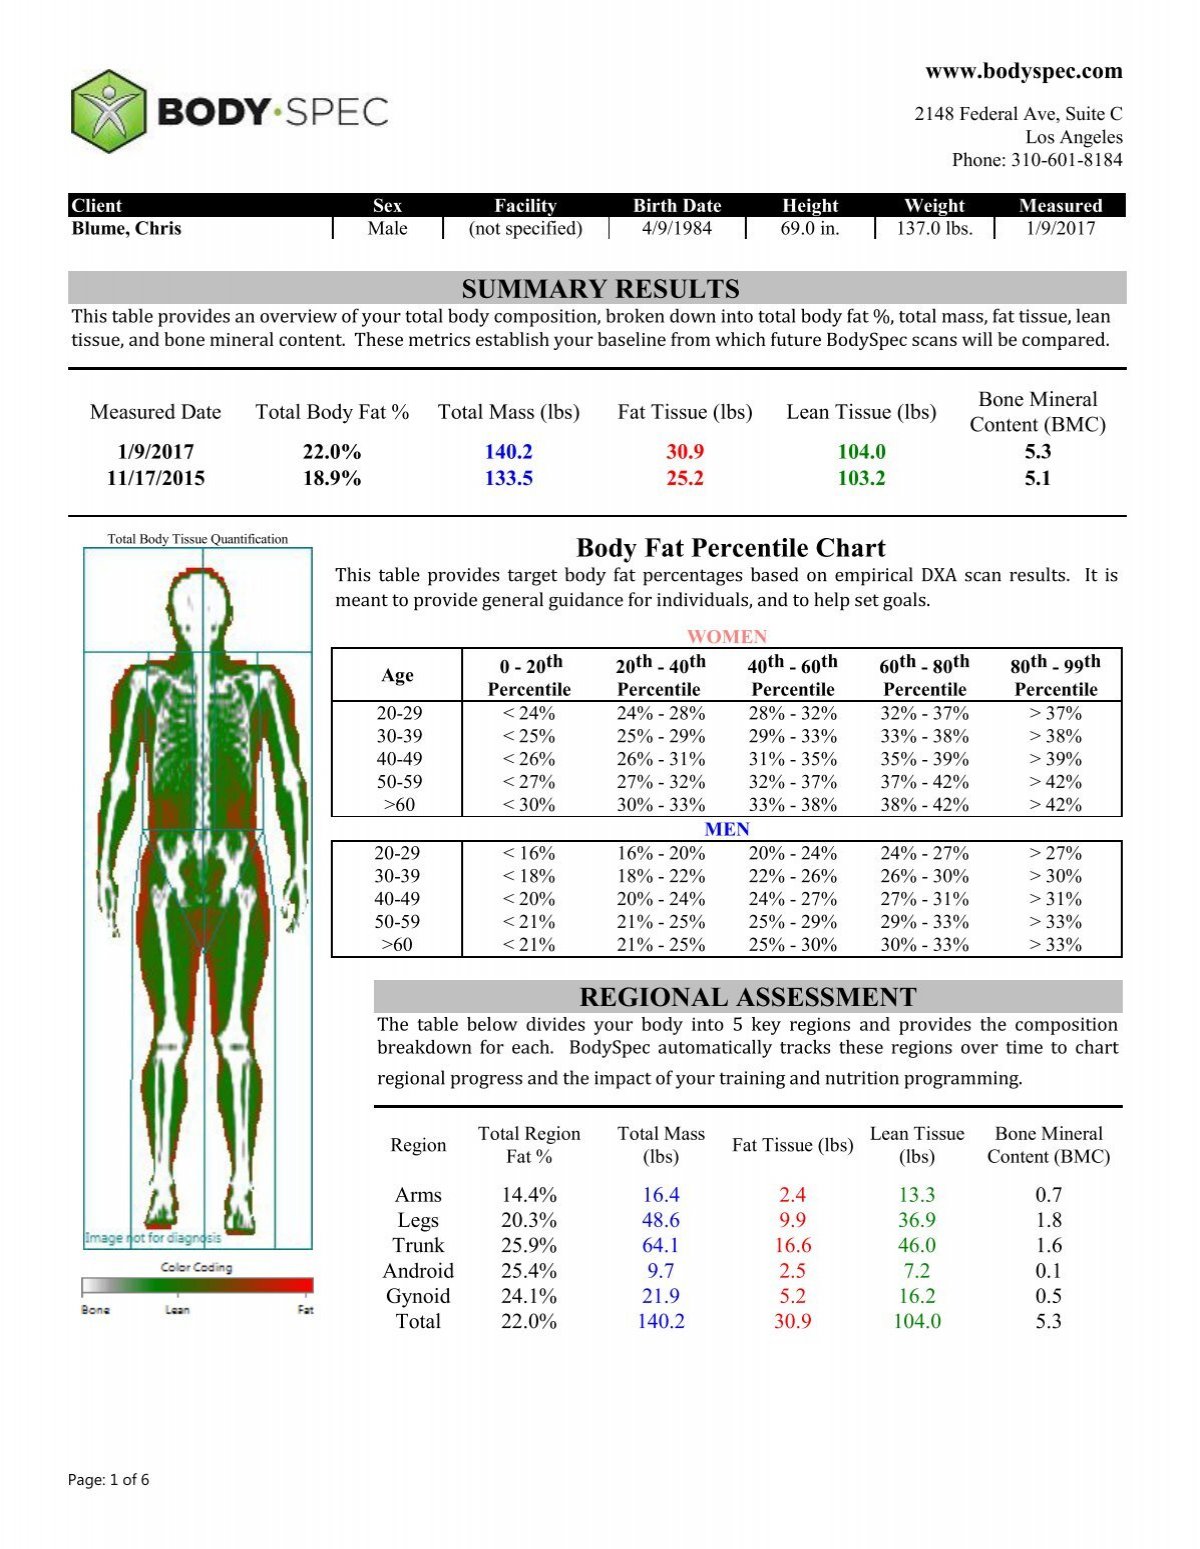 Body Fat Percentile Chart REGIONAL ASSESSMENT